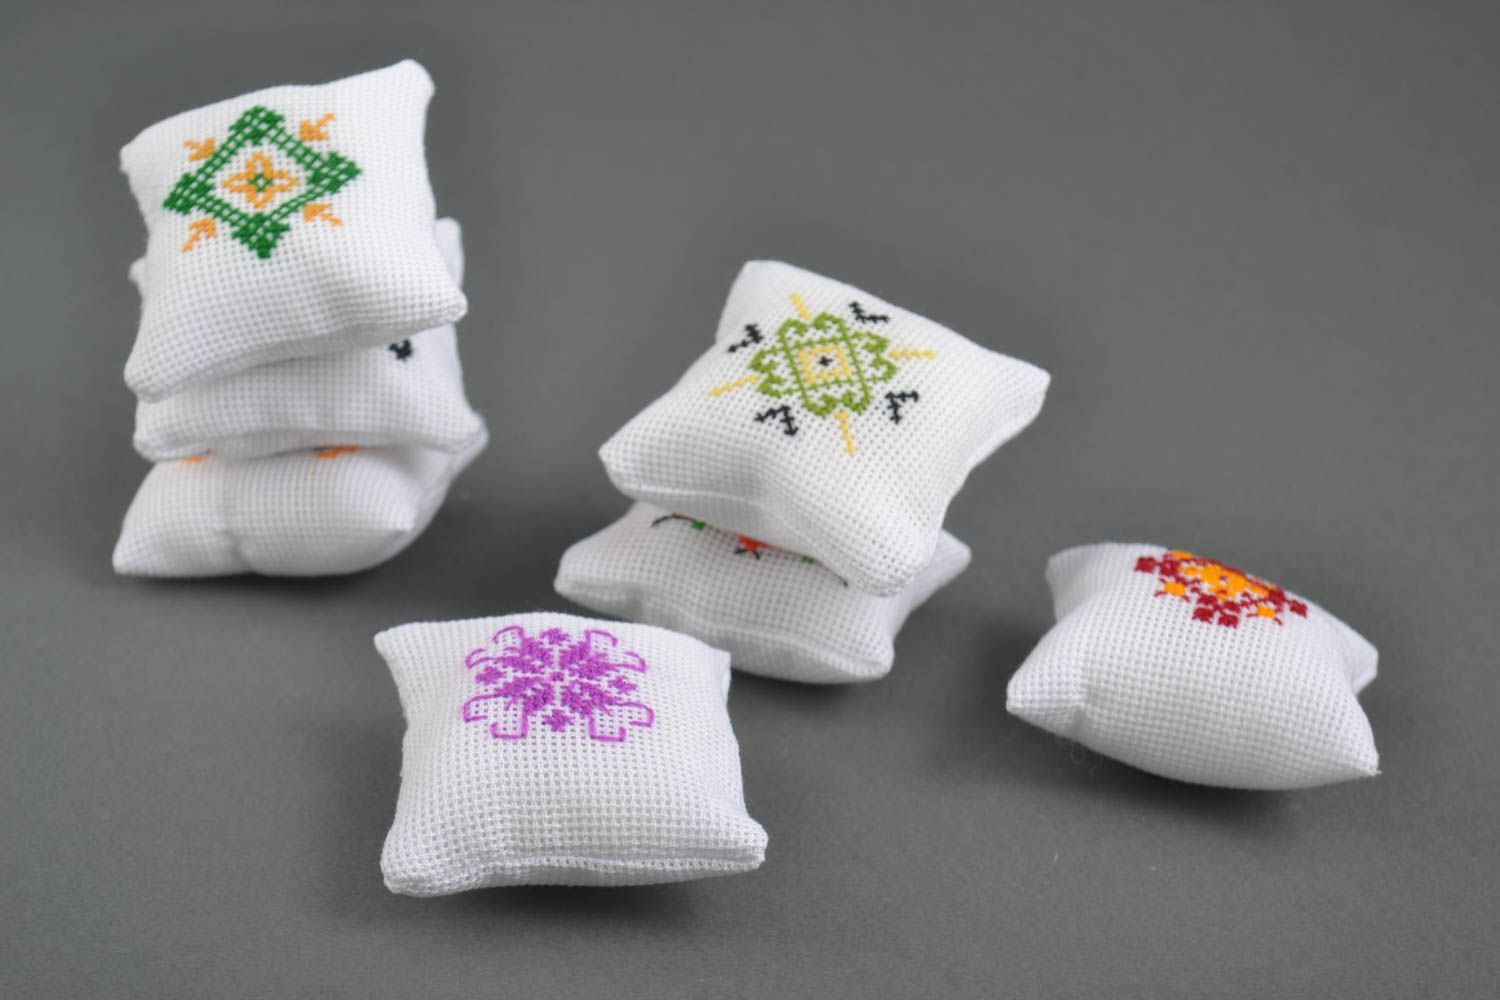 Handmade pincushions embroidery supplies 7 pin cushions needle holders gift idea photo 4